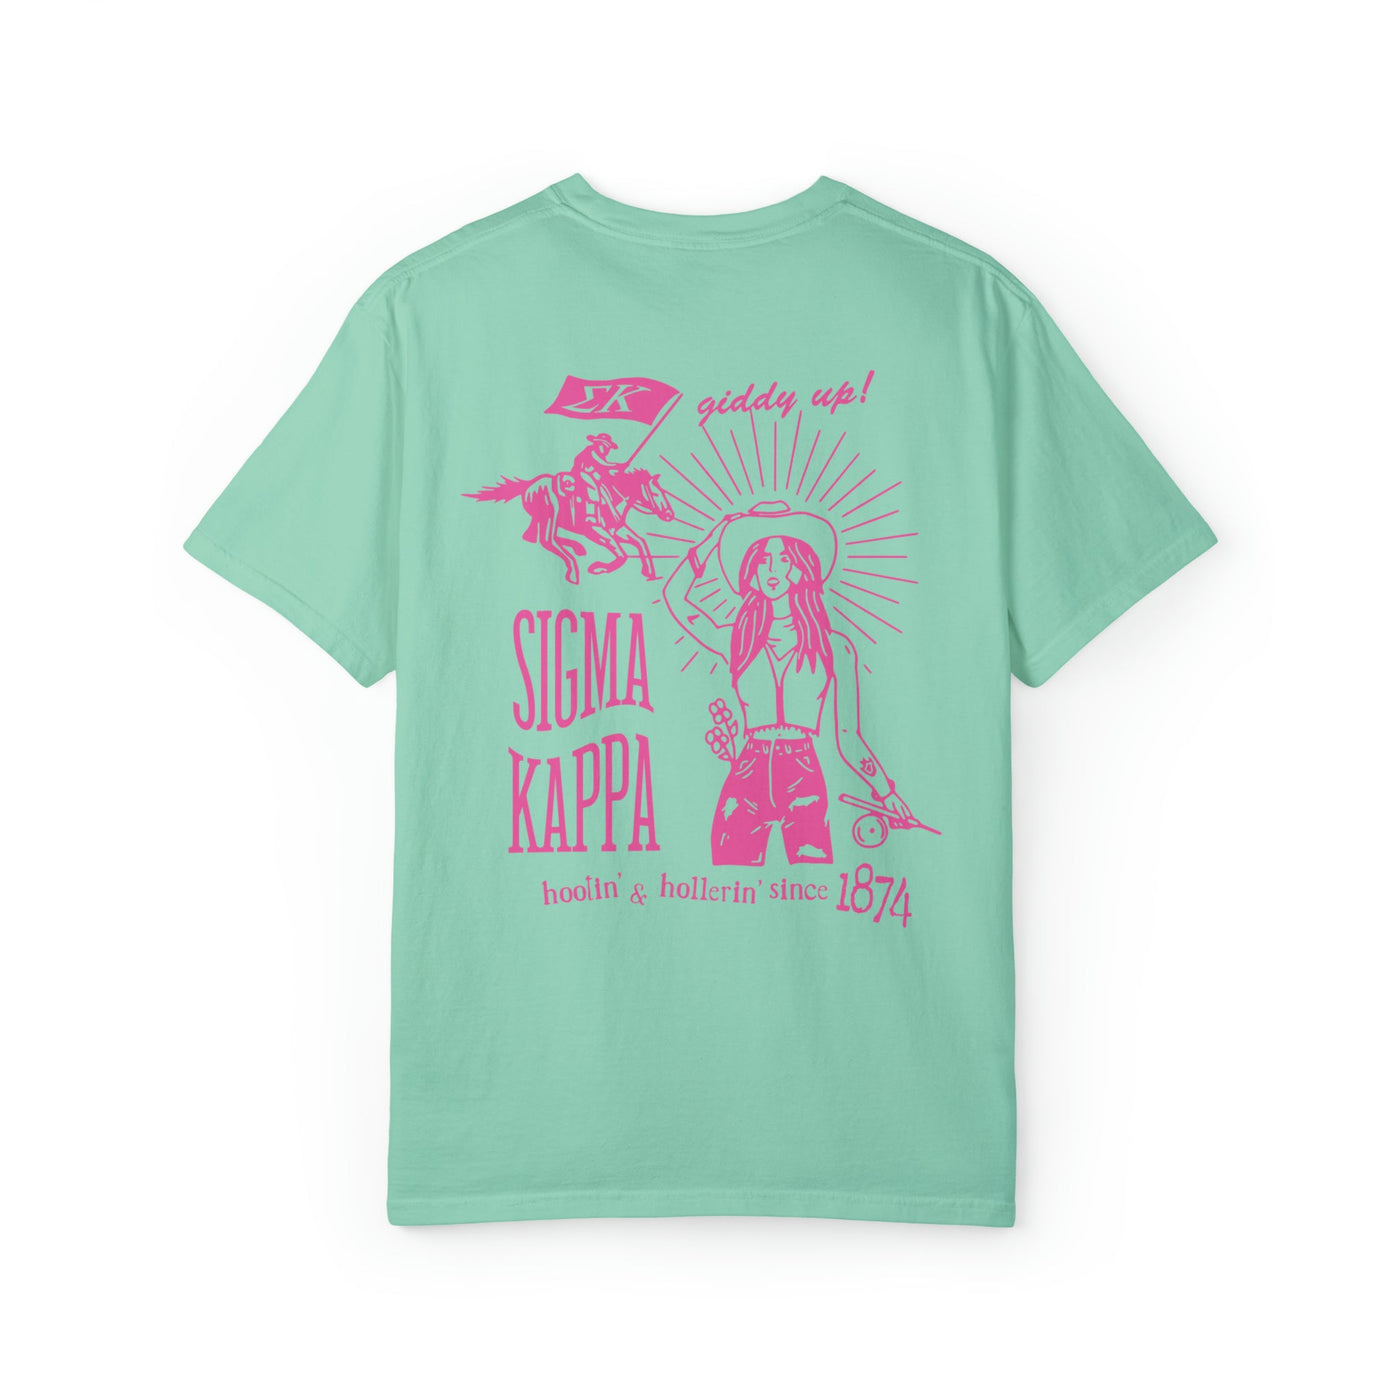 Sigma Kappa Country Western Pink Sorority T-shirt